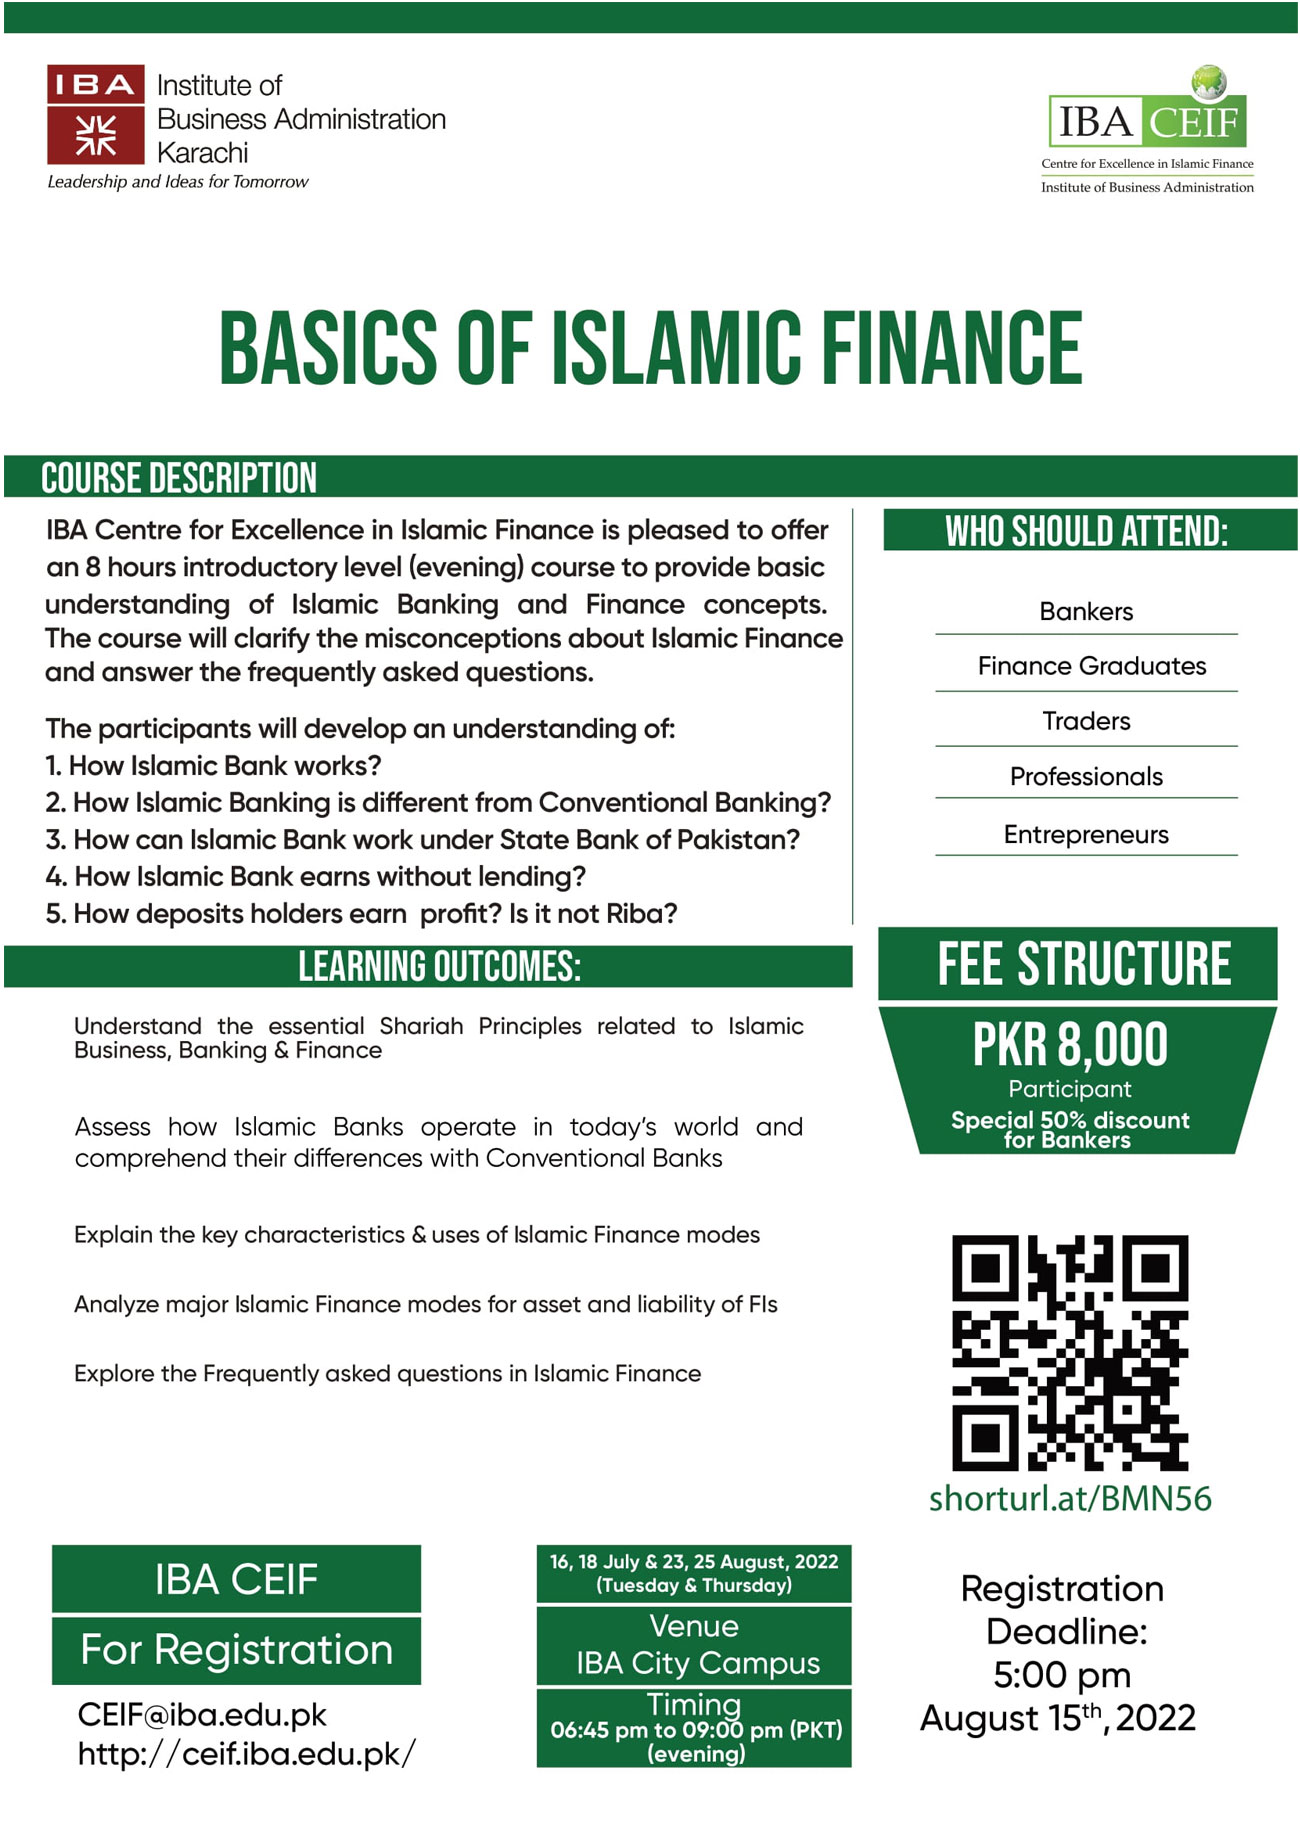 Basics on Islamic Finance